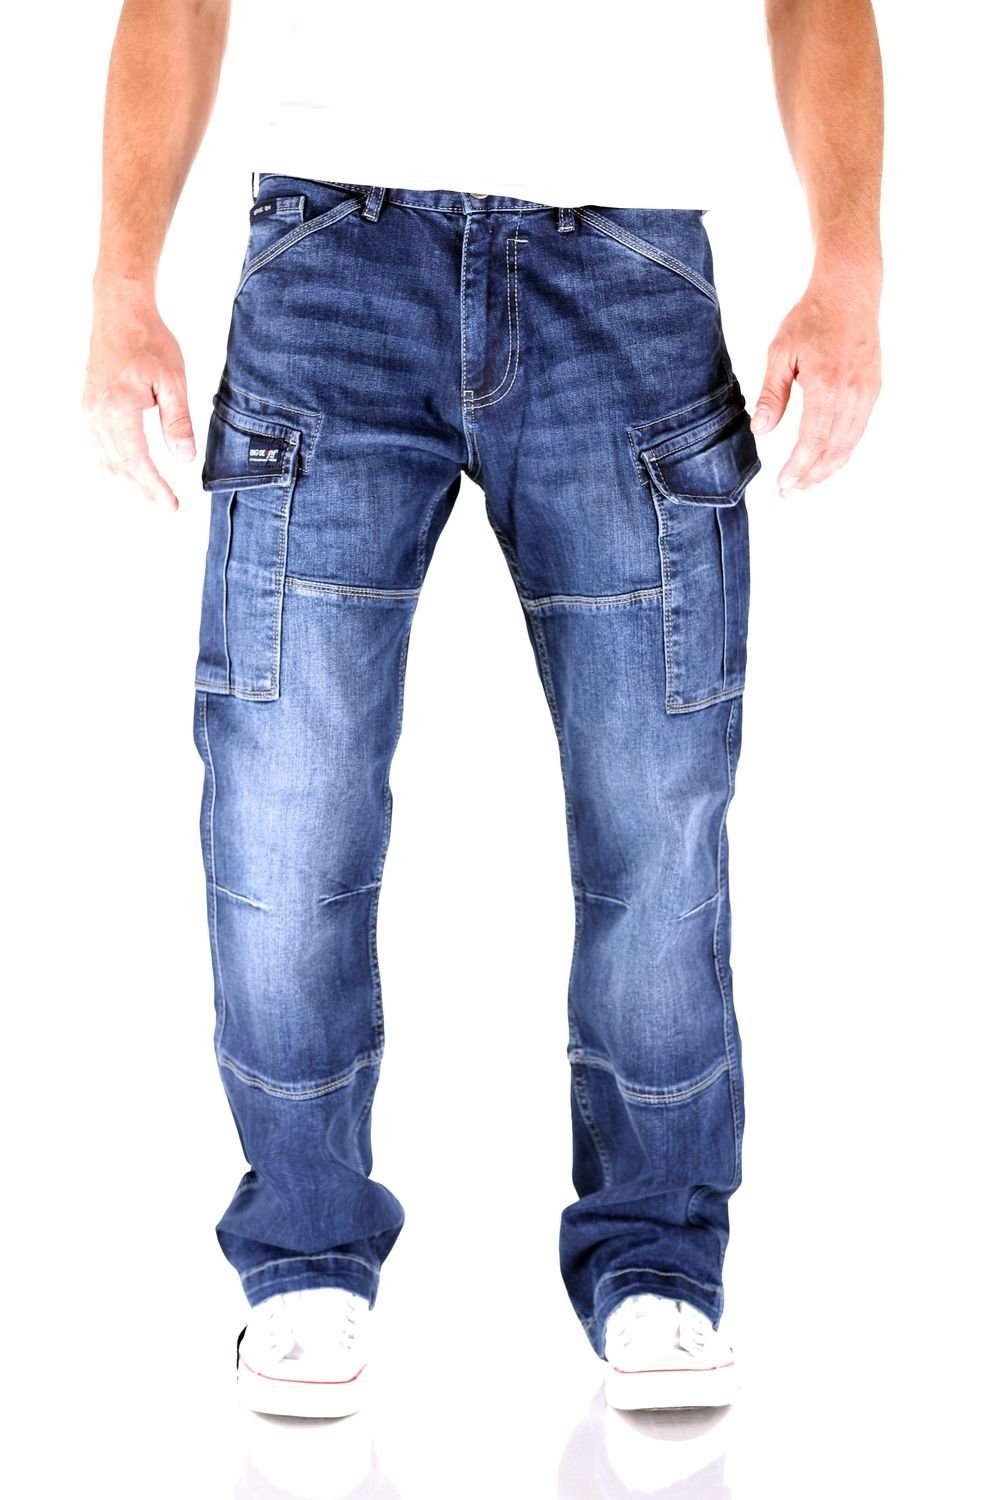 Seven Aged Dark Big Brian Herren Seven Cargo Big Cargojeans Jeans